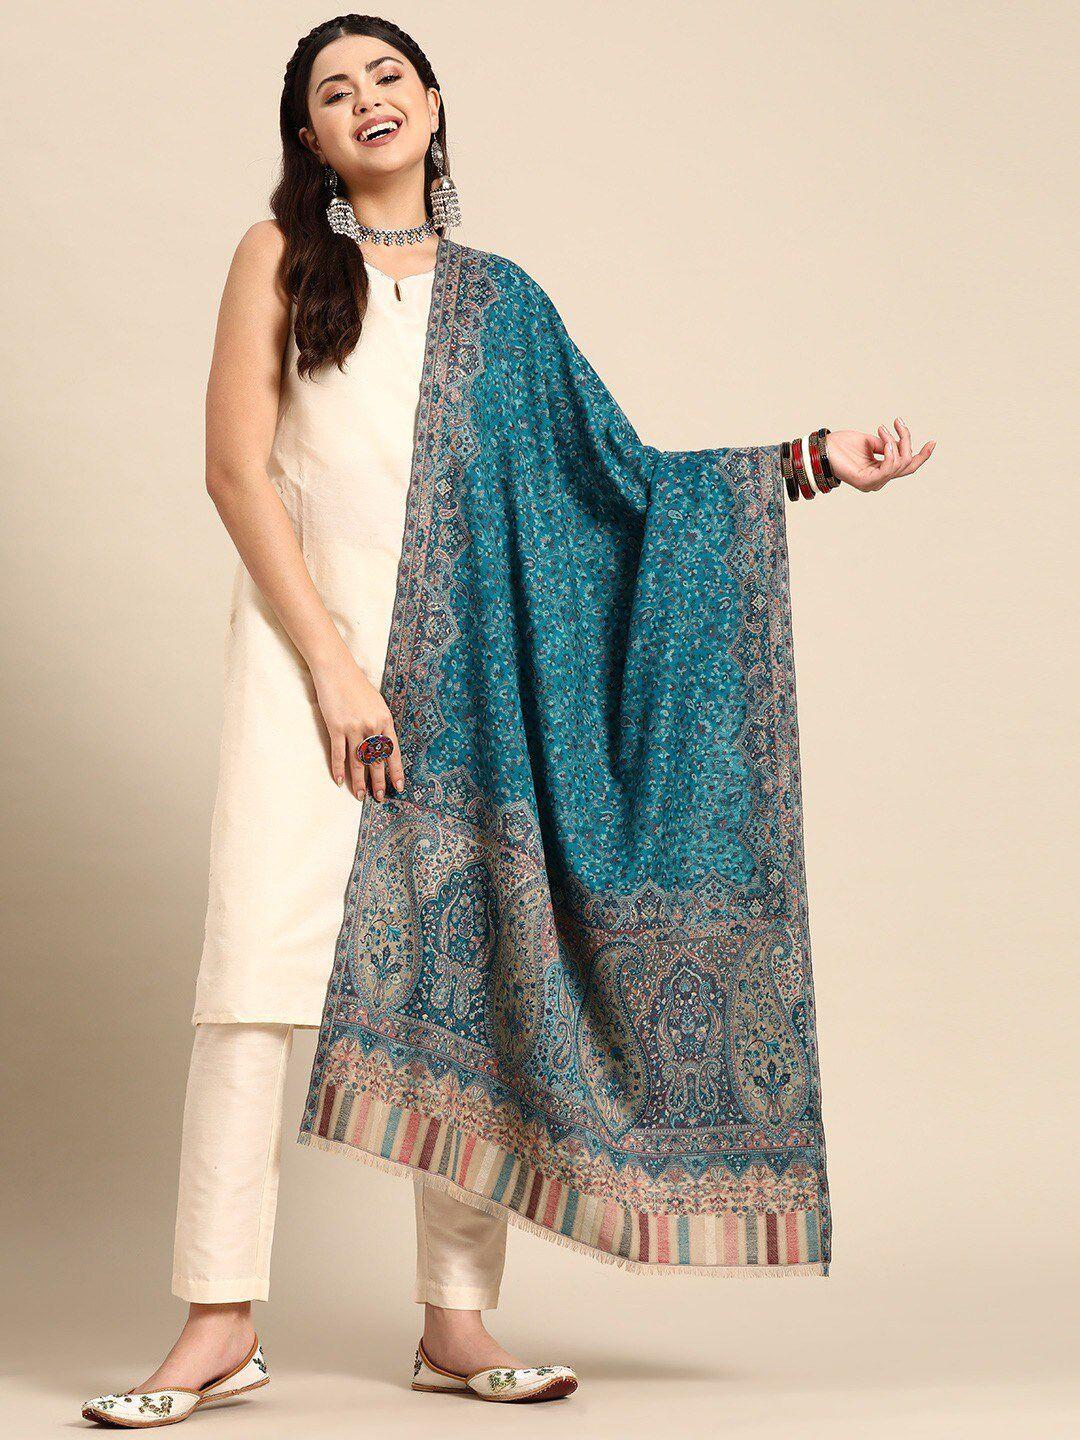 sangria-woven-design-fringed-border-shawl